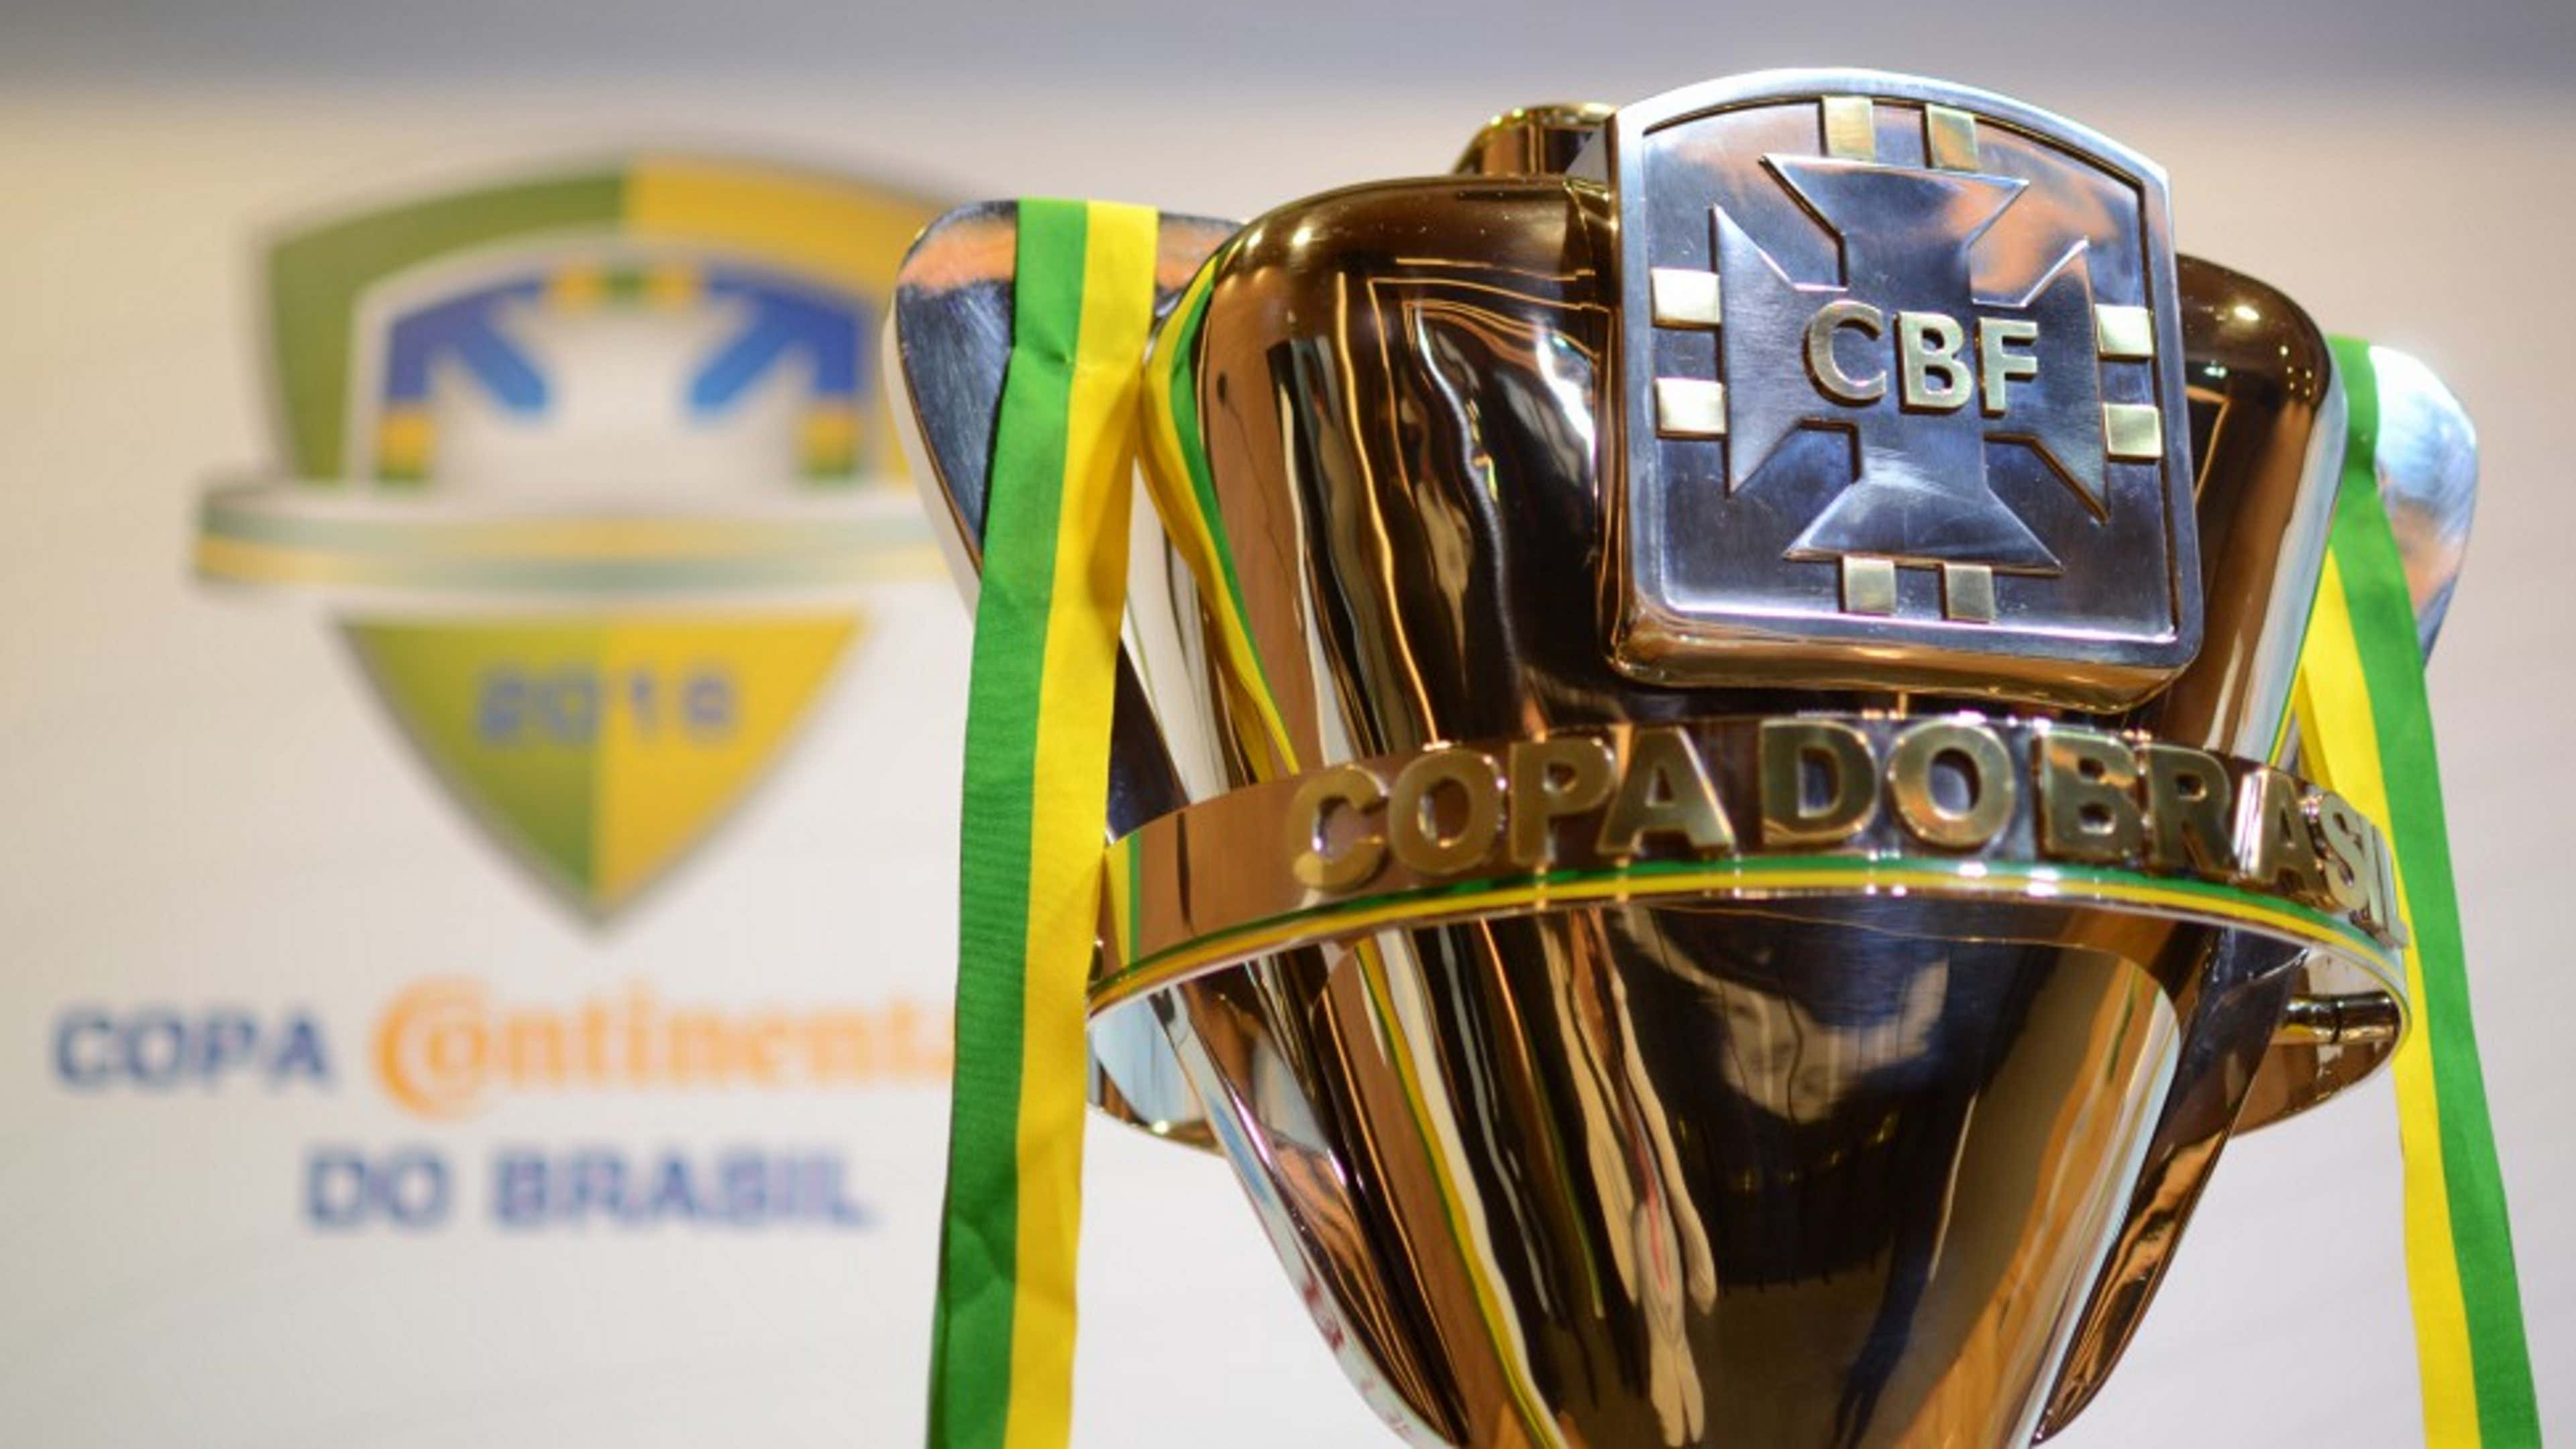 Os jogos das oitavas de final da Copa do Brasil 2022